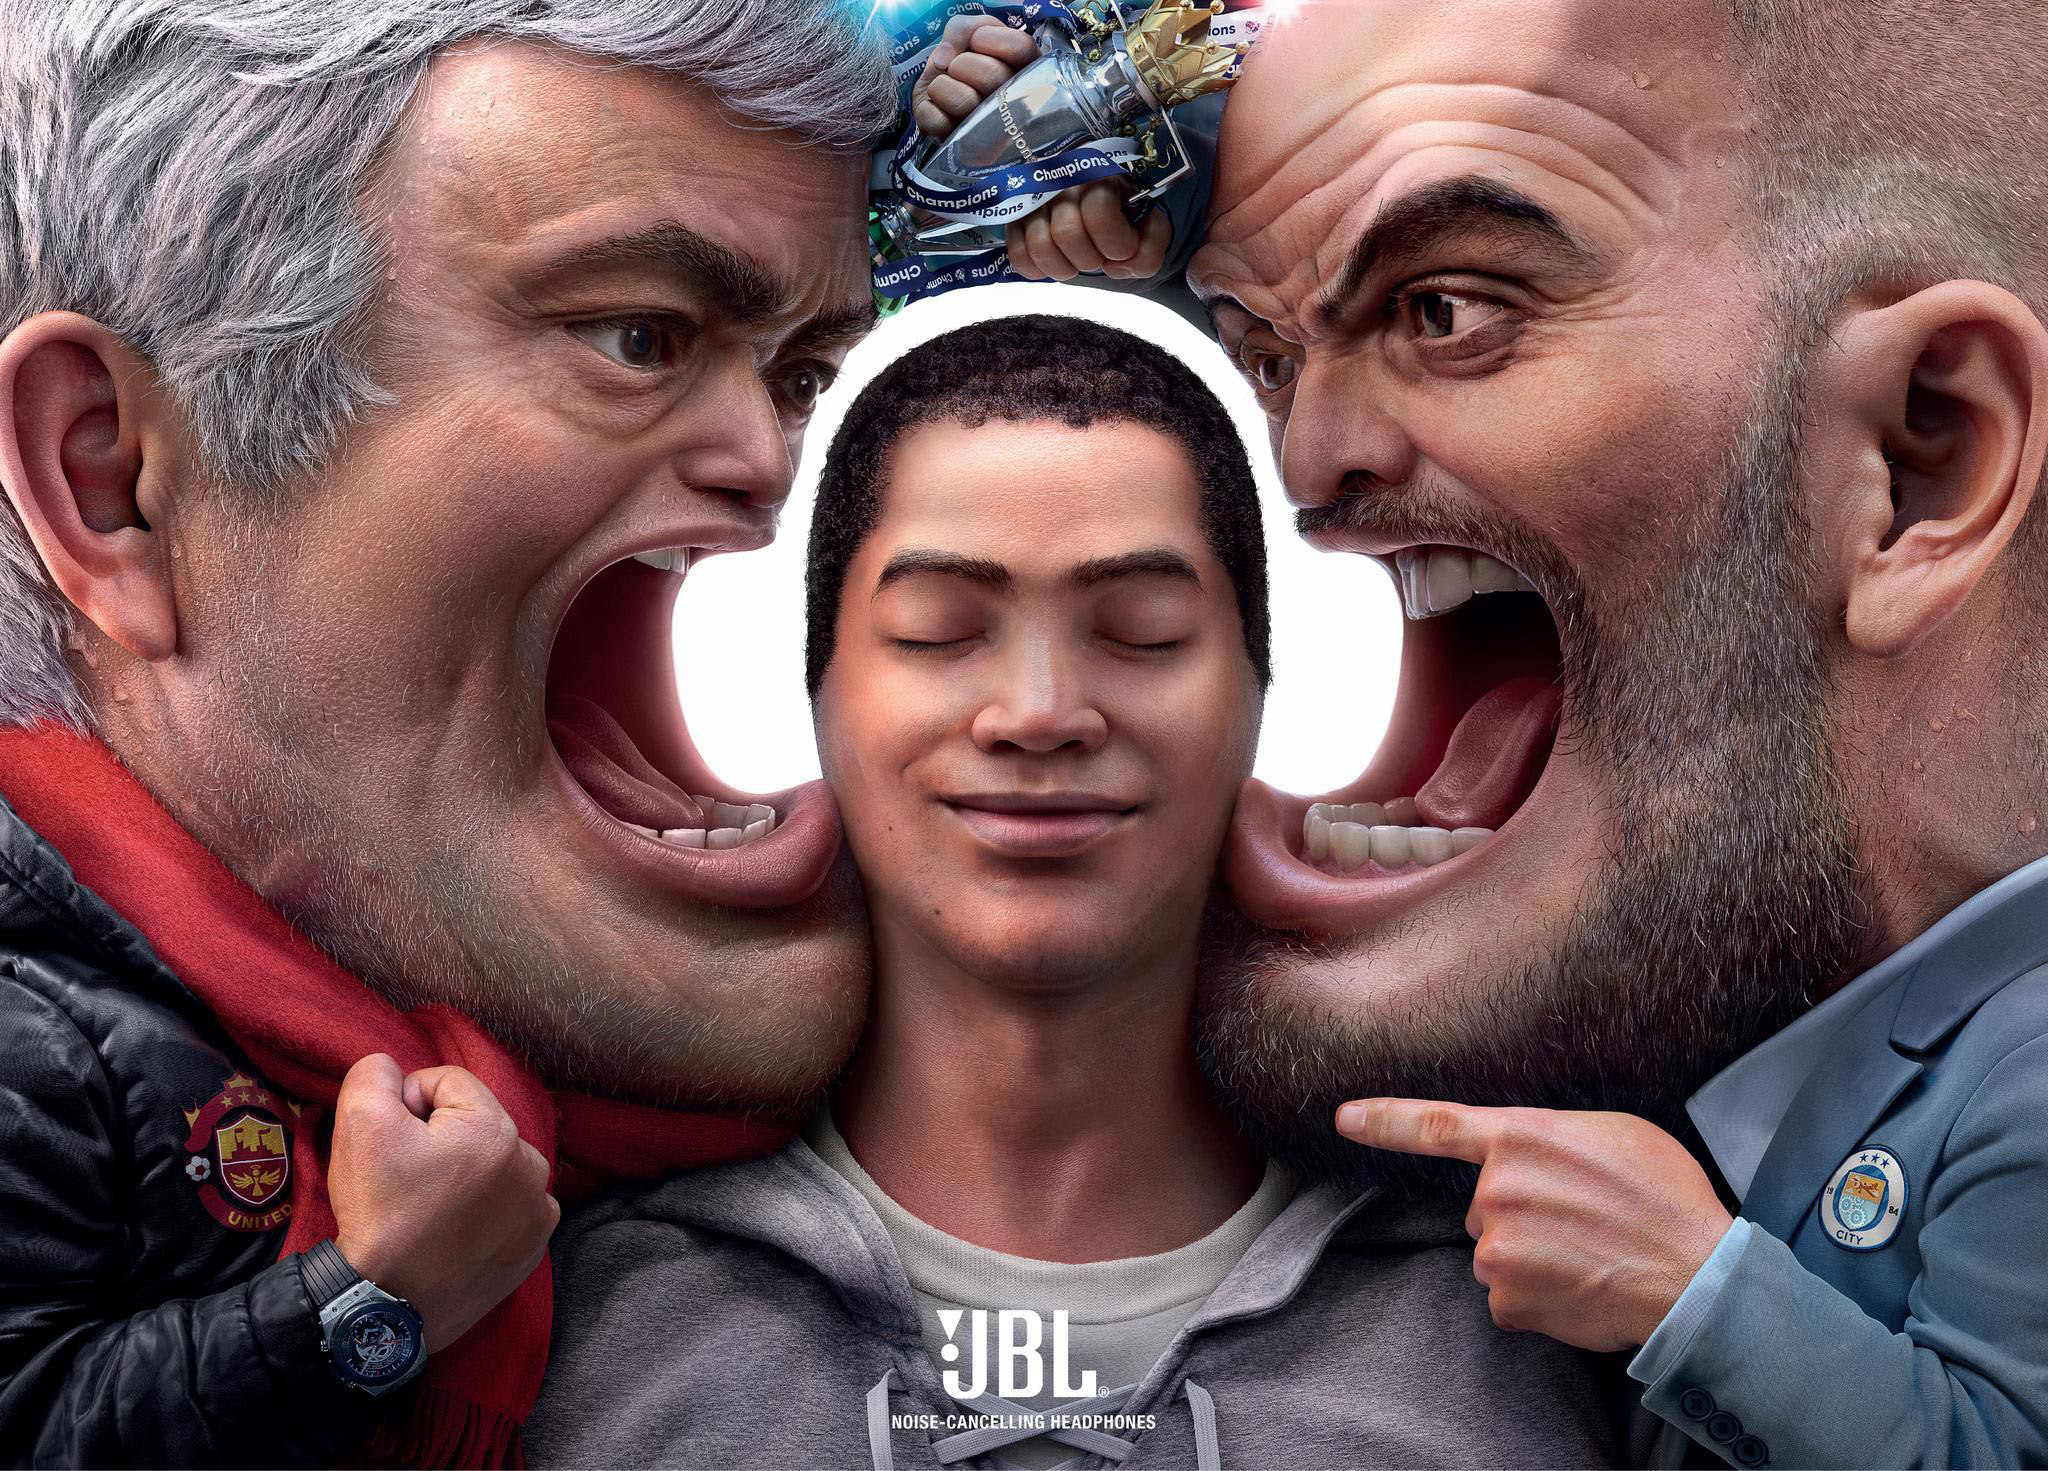 JBL Noise Cancelling Headphones - Jose Mourinho and Pep Guardiola